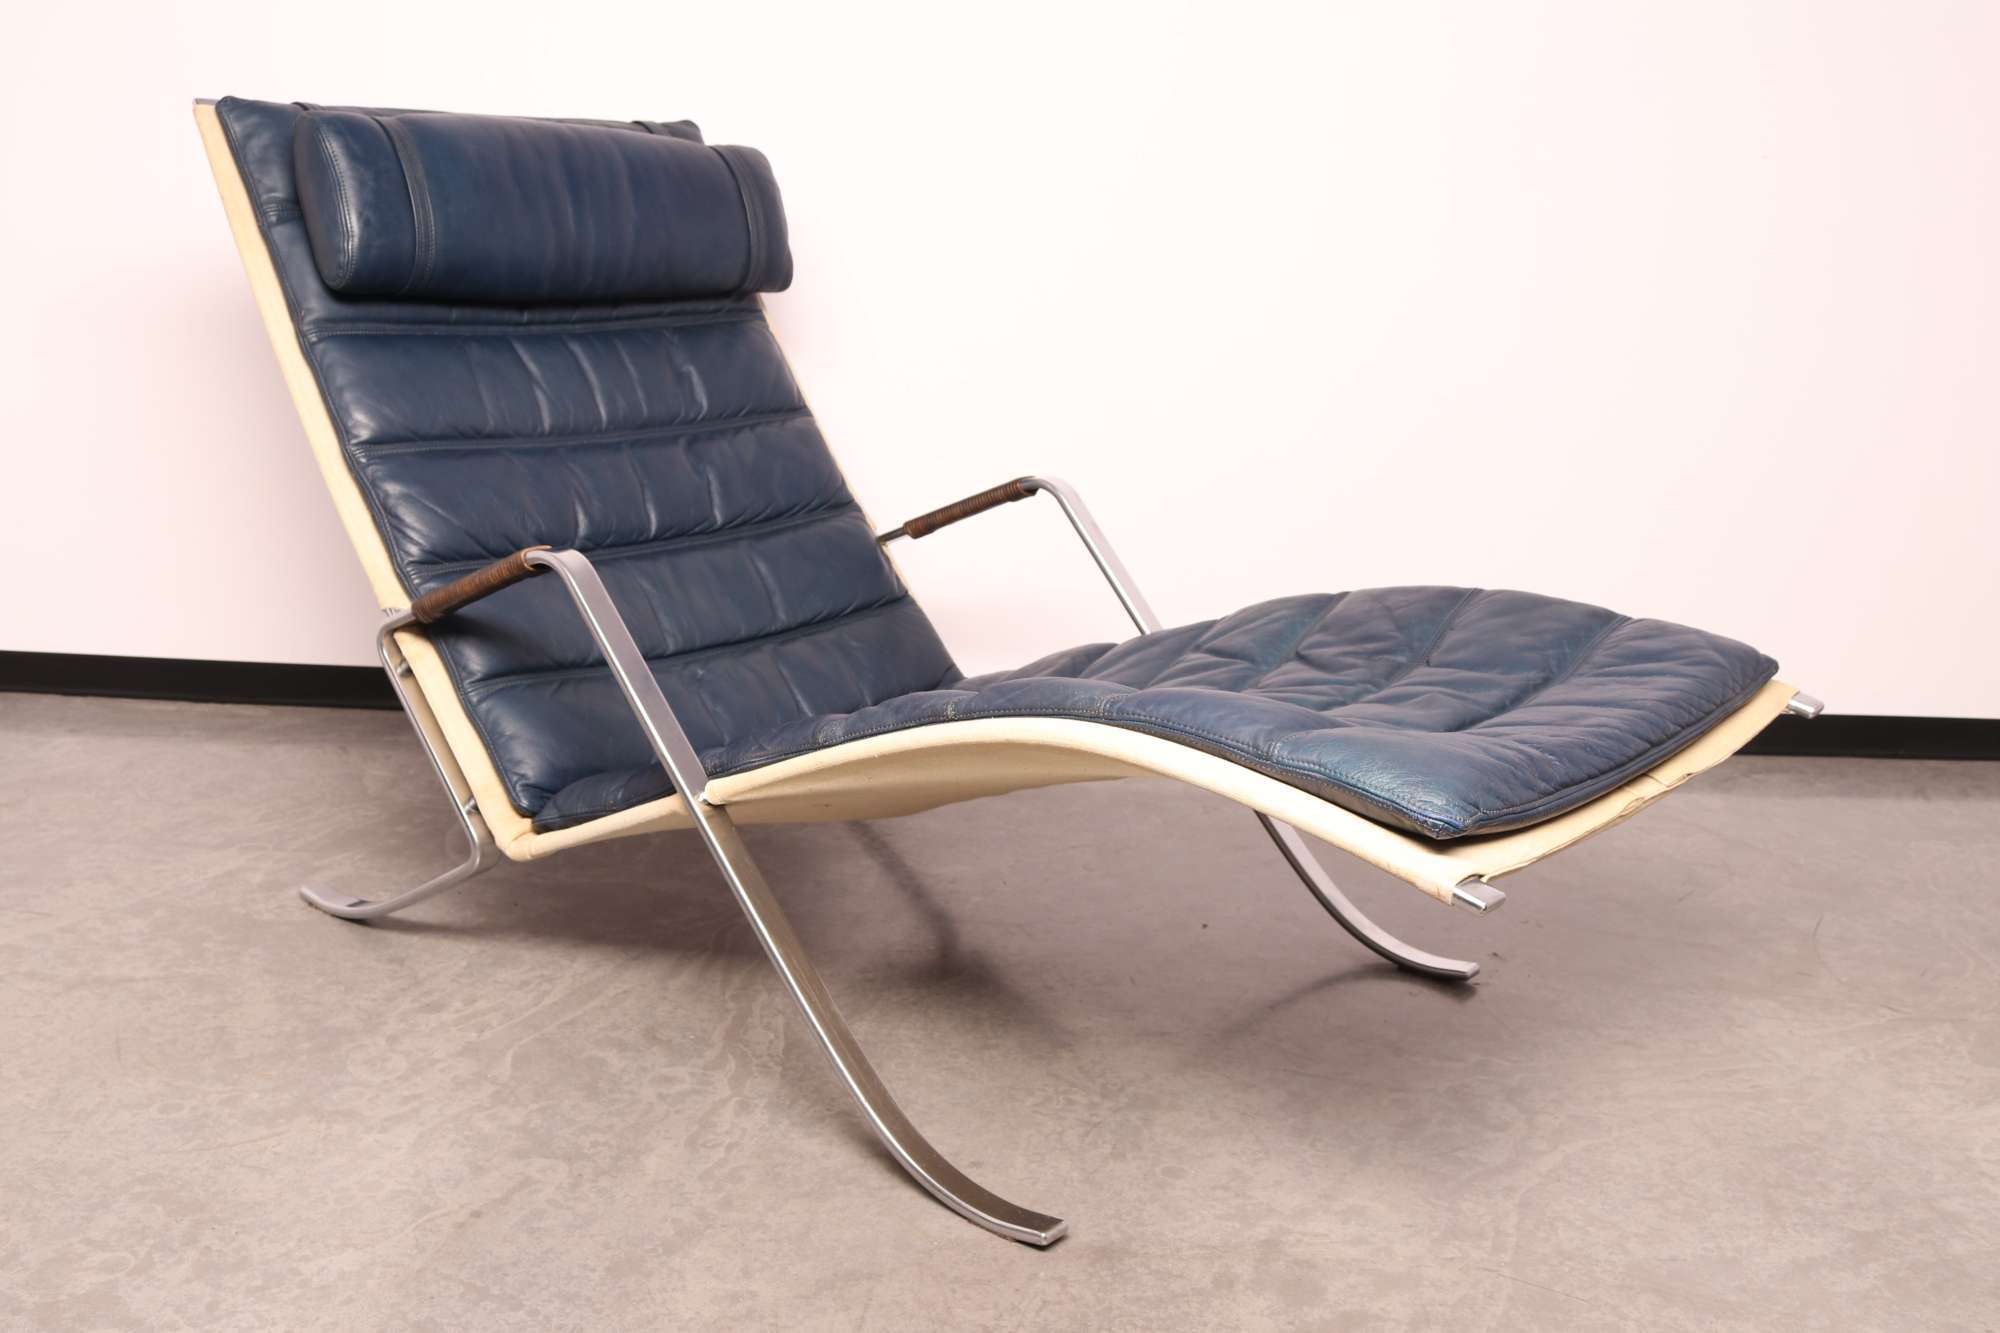 Grasshopper lounge chair vintage FK 87 Danish design iconic rare (8)